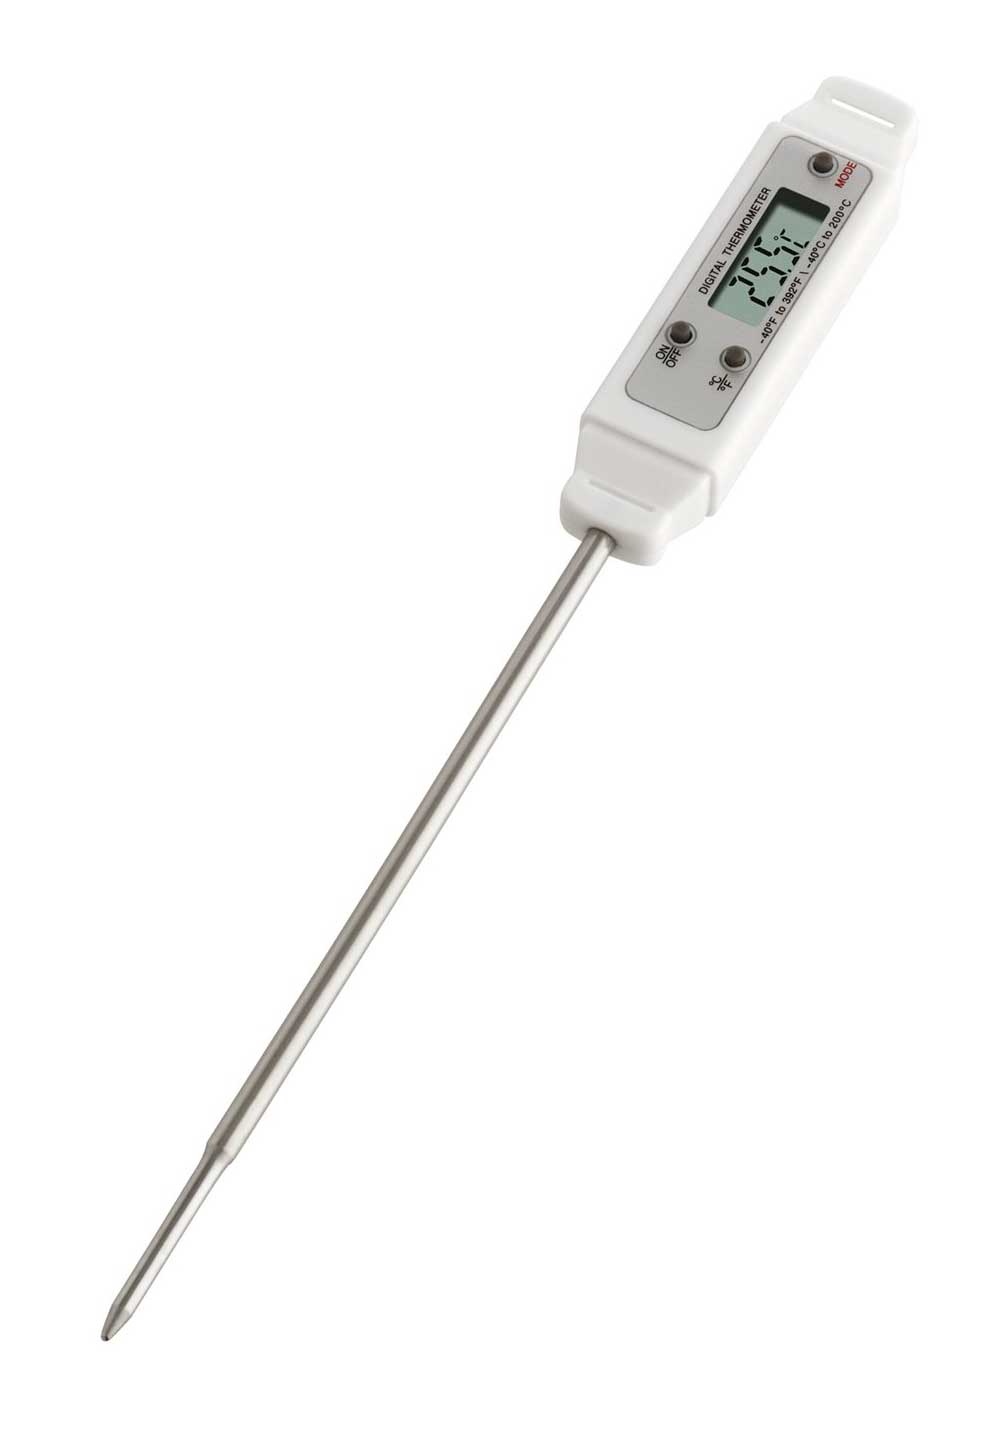 Pocket-Digitemp thermometers